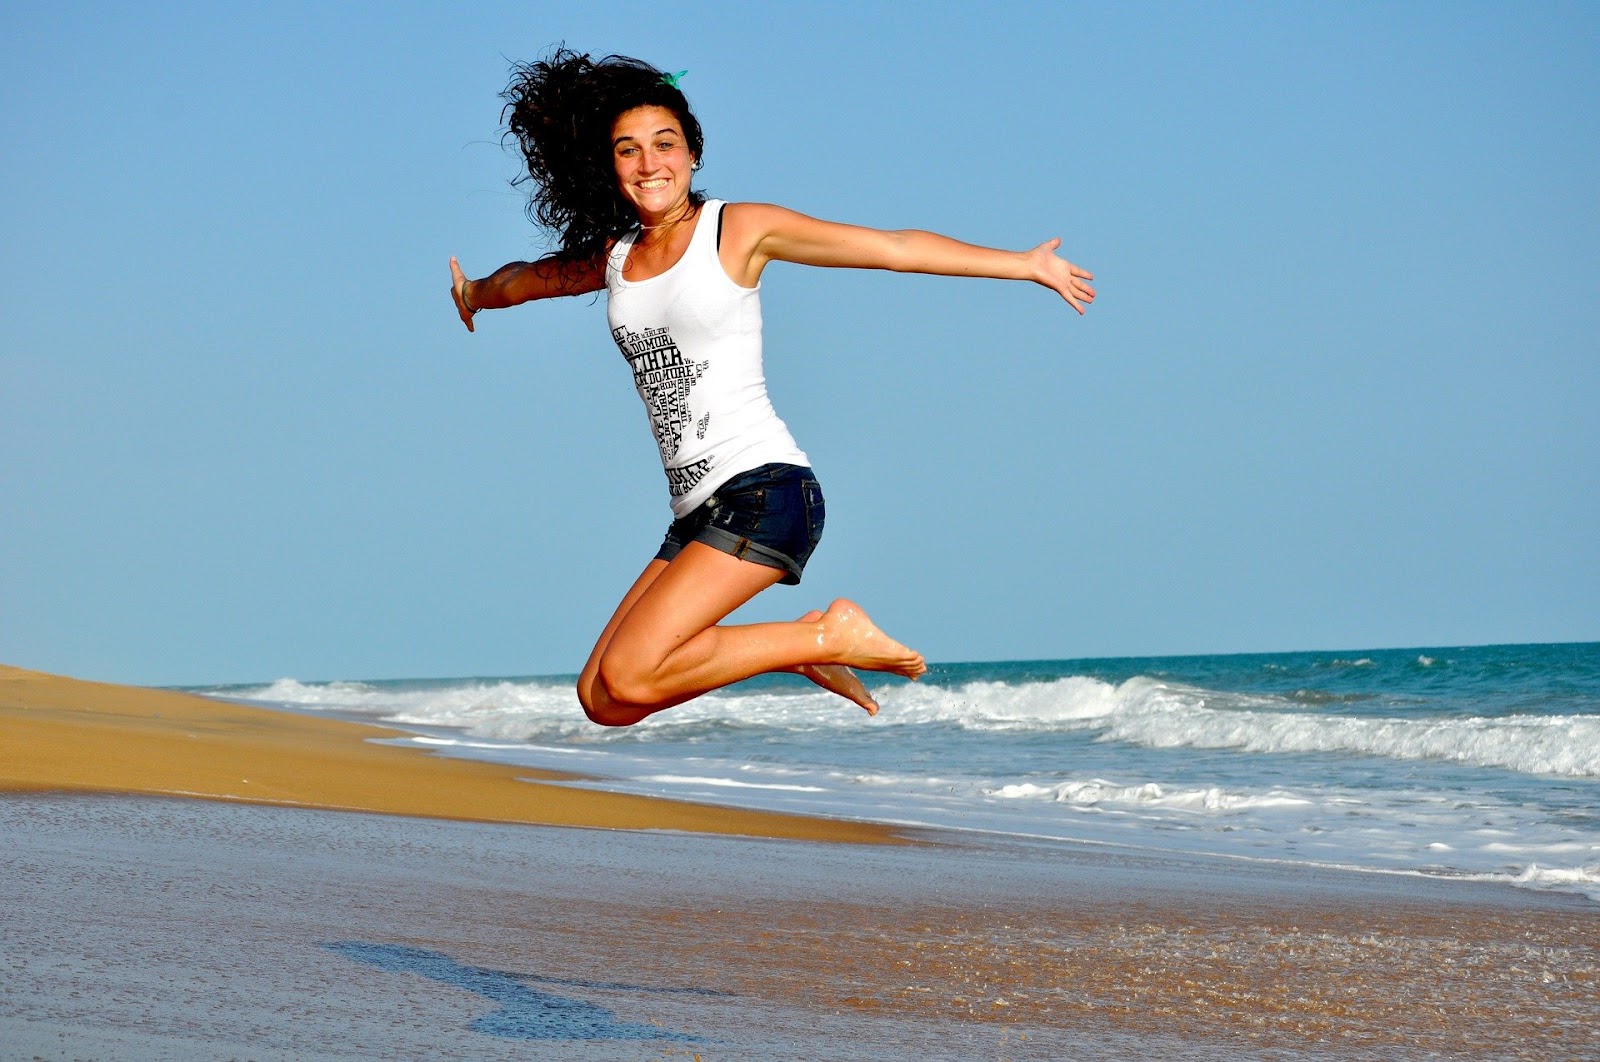 Woman jumping at the beach